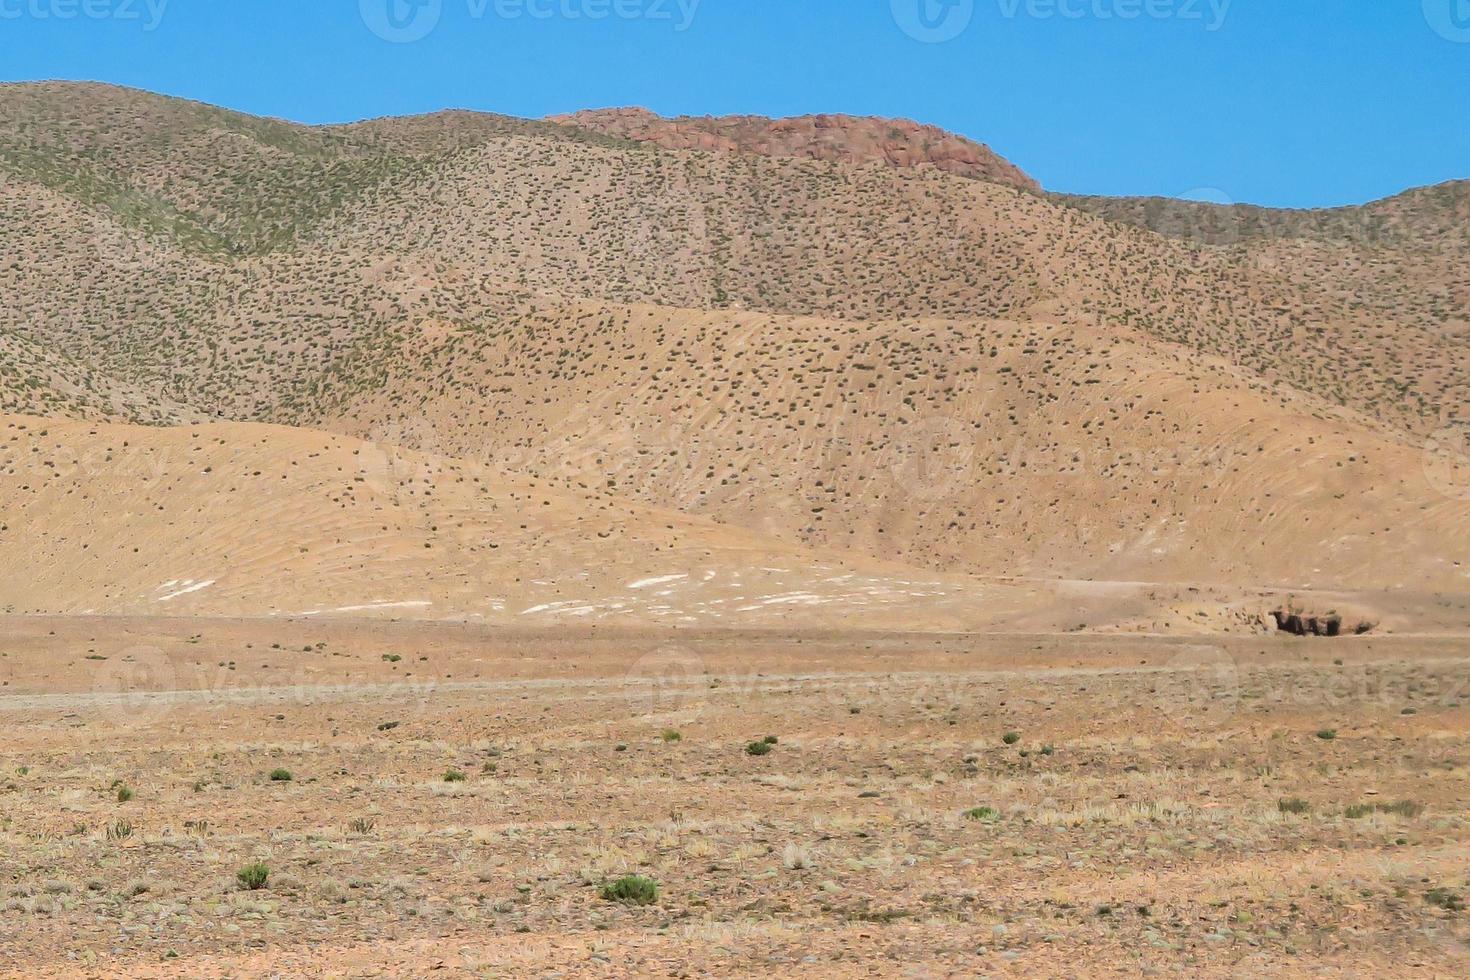 Scenic desert landscape photo